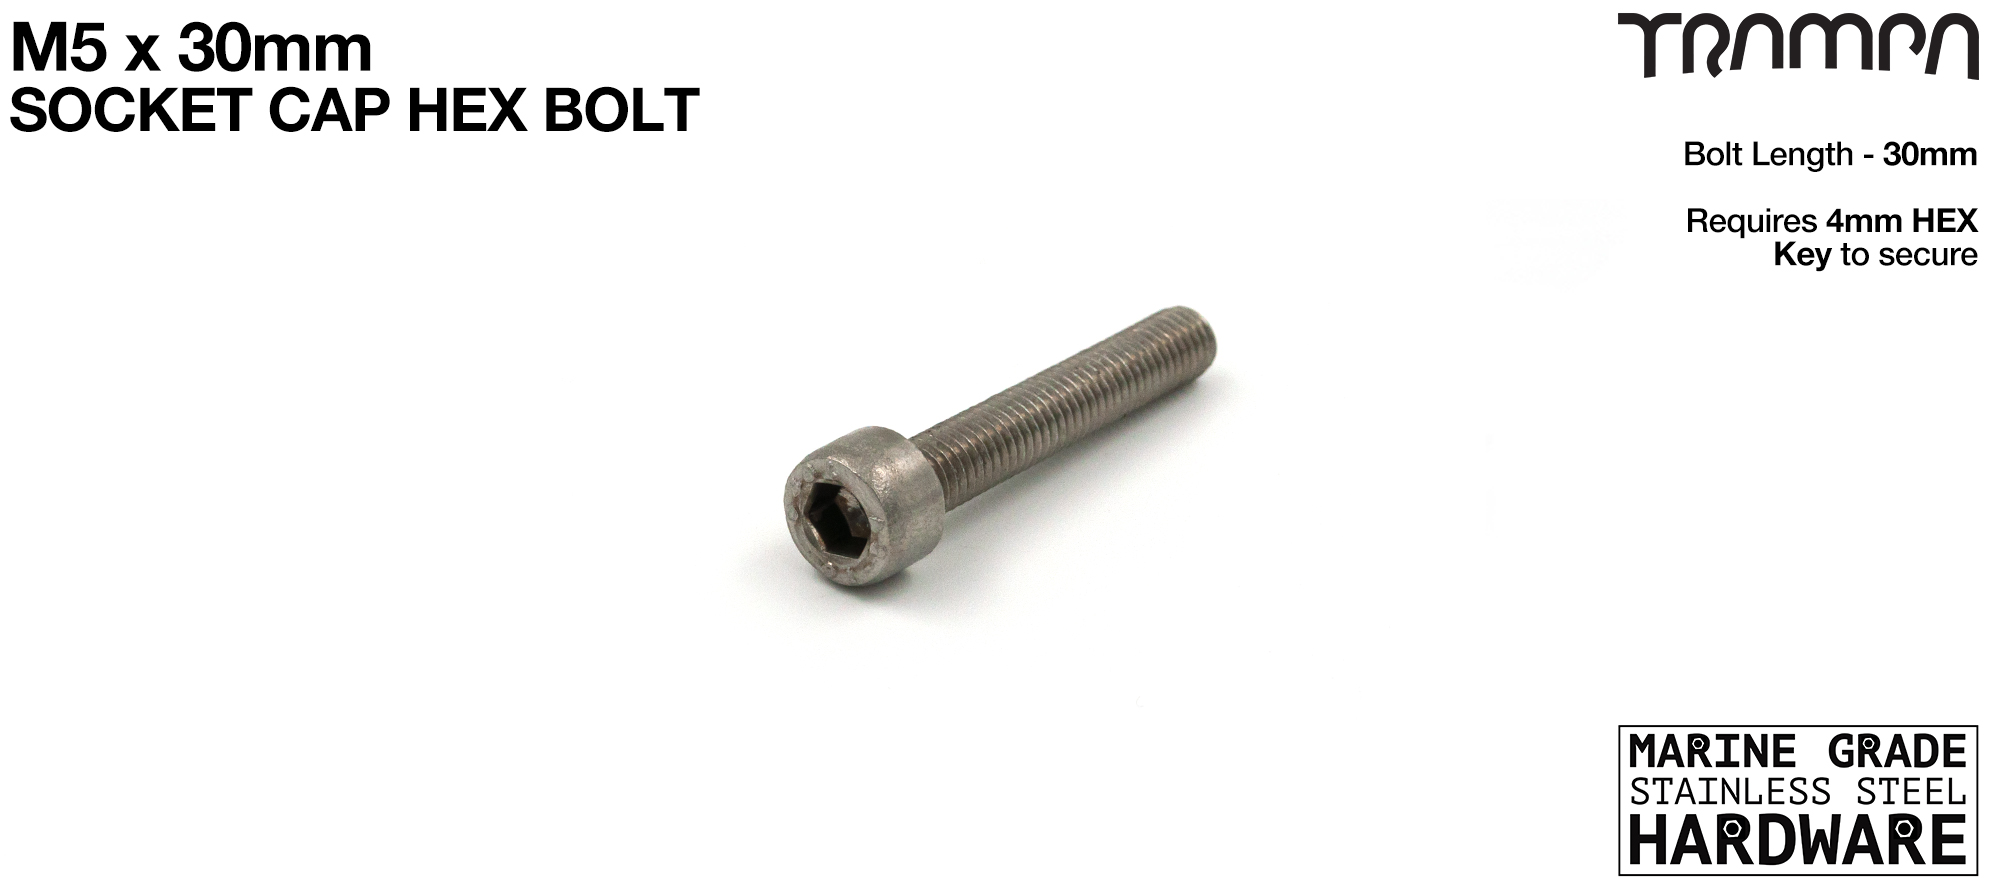 M5 x 30mm Socket Capped Head Allen-Key Bolt ISO 4762 Marine Grade Stainless Steel 